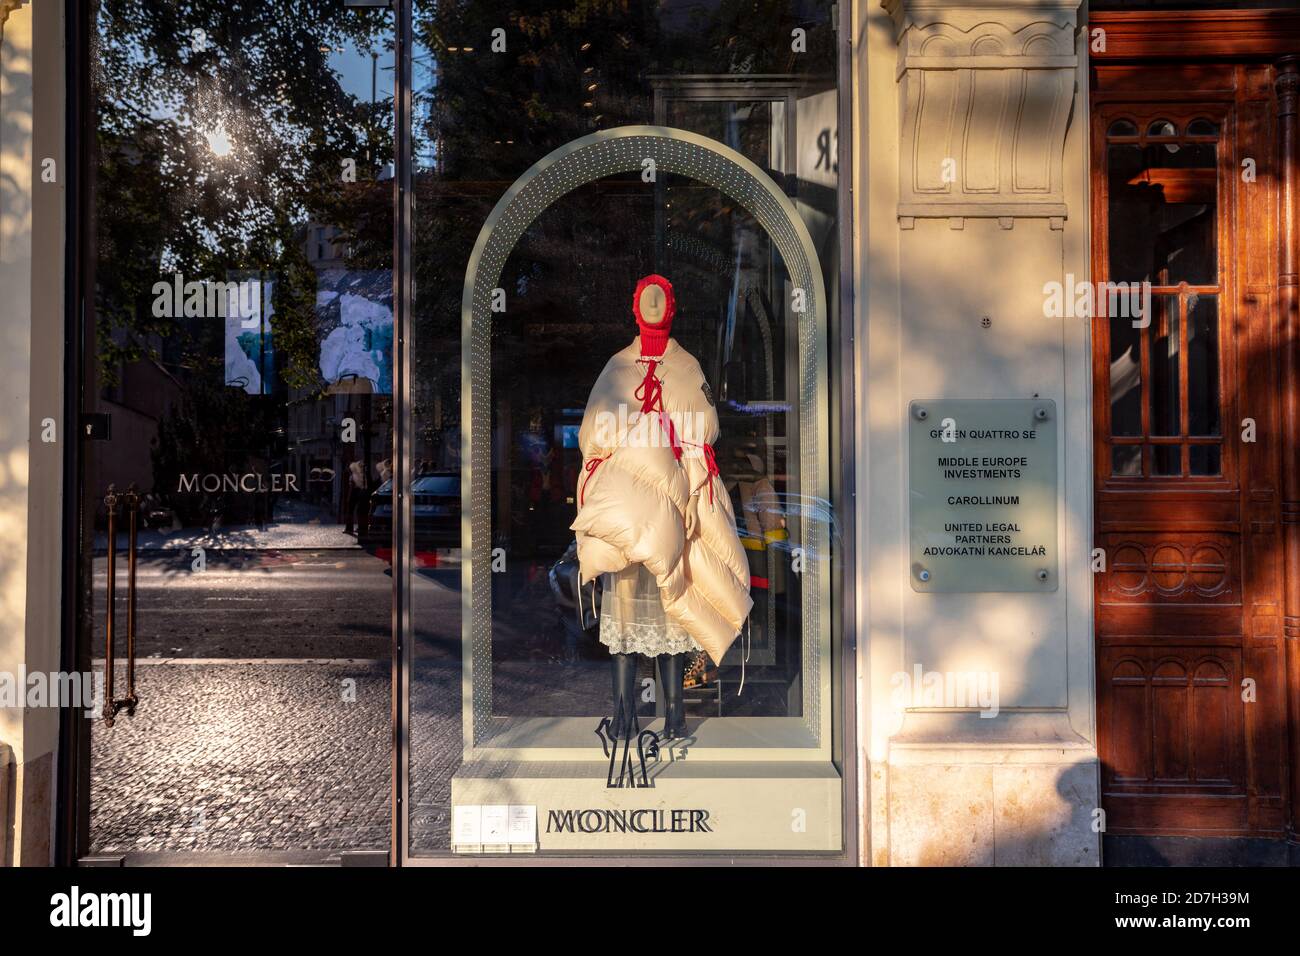 Moncler shop window in Prague, Czech Republic Stock Photo - Alamy